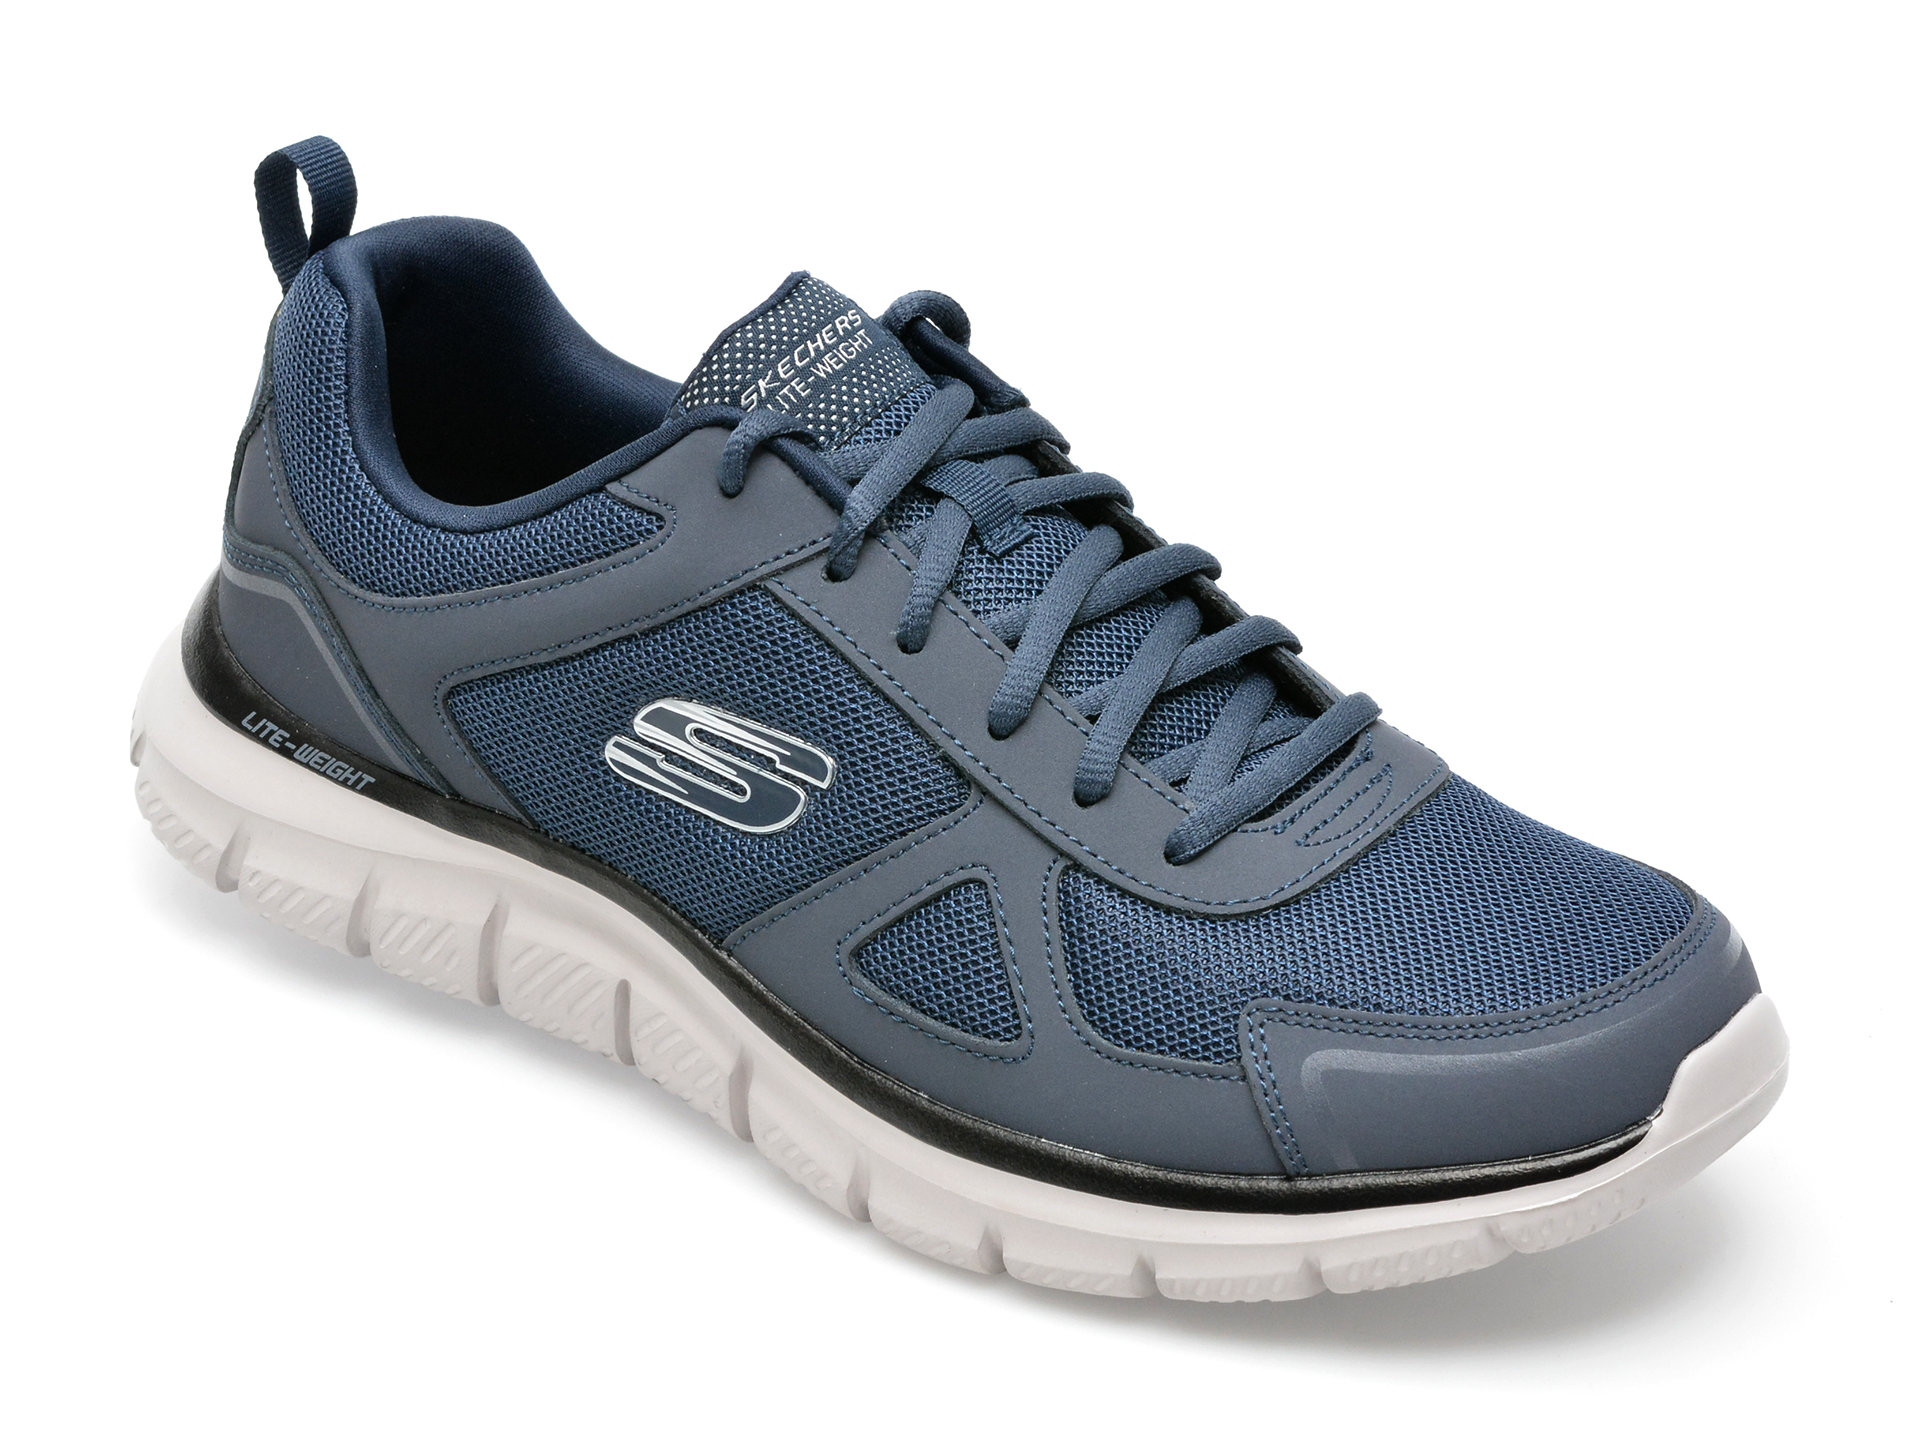 Pantofi sport SKECHERS bleumarin, TRACK, din material textil si piele naturala